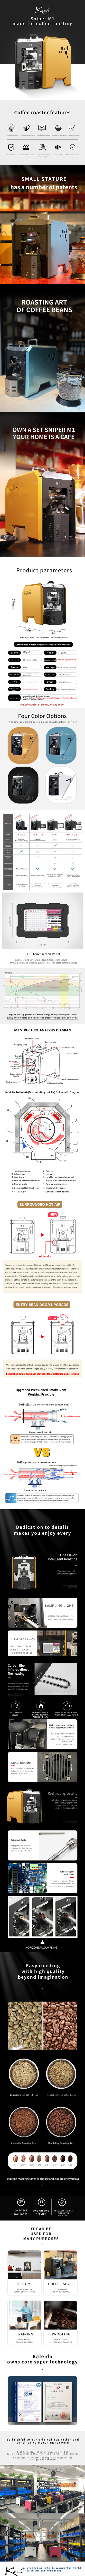 simple coffee roaster